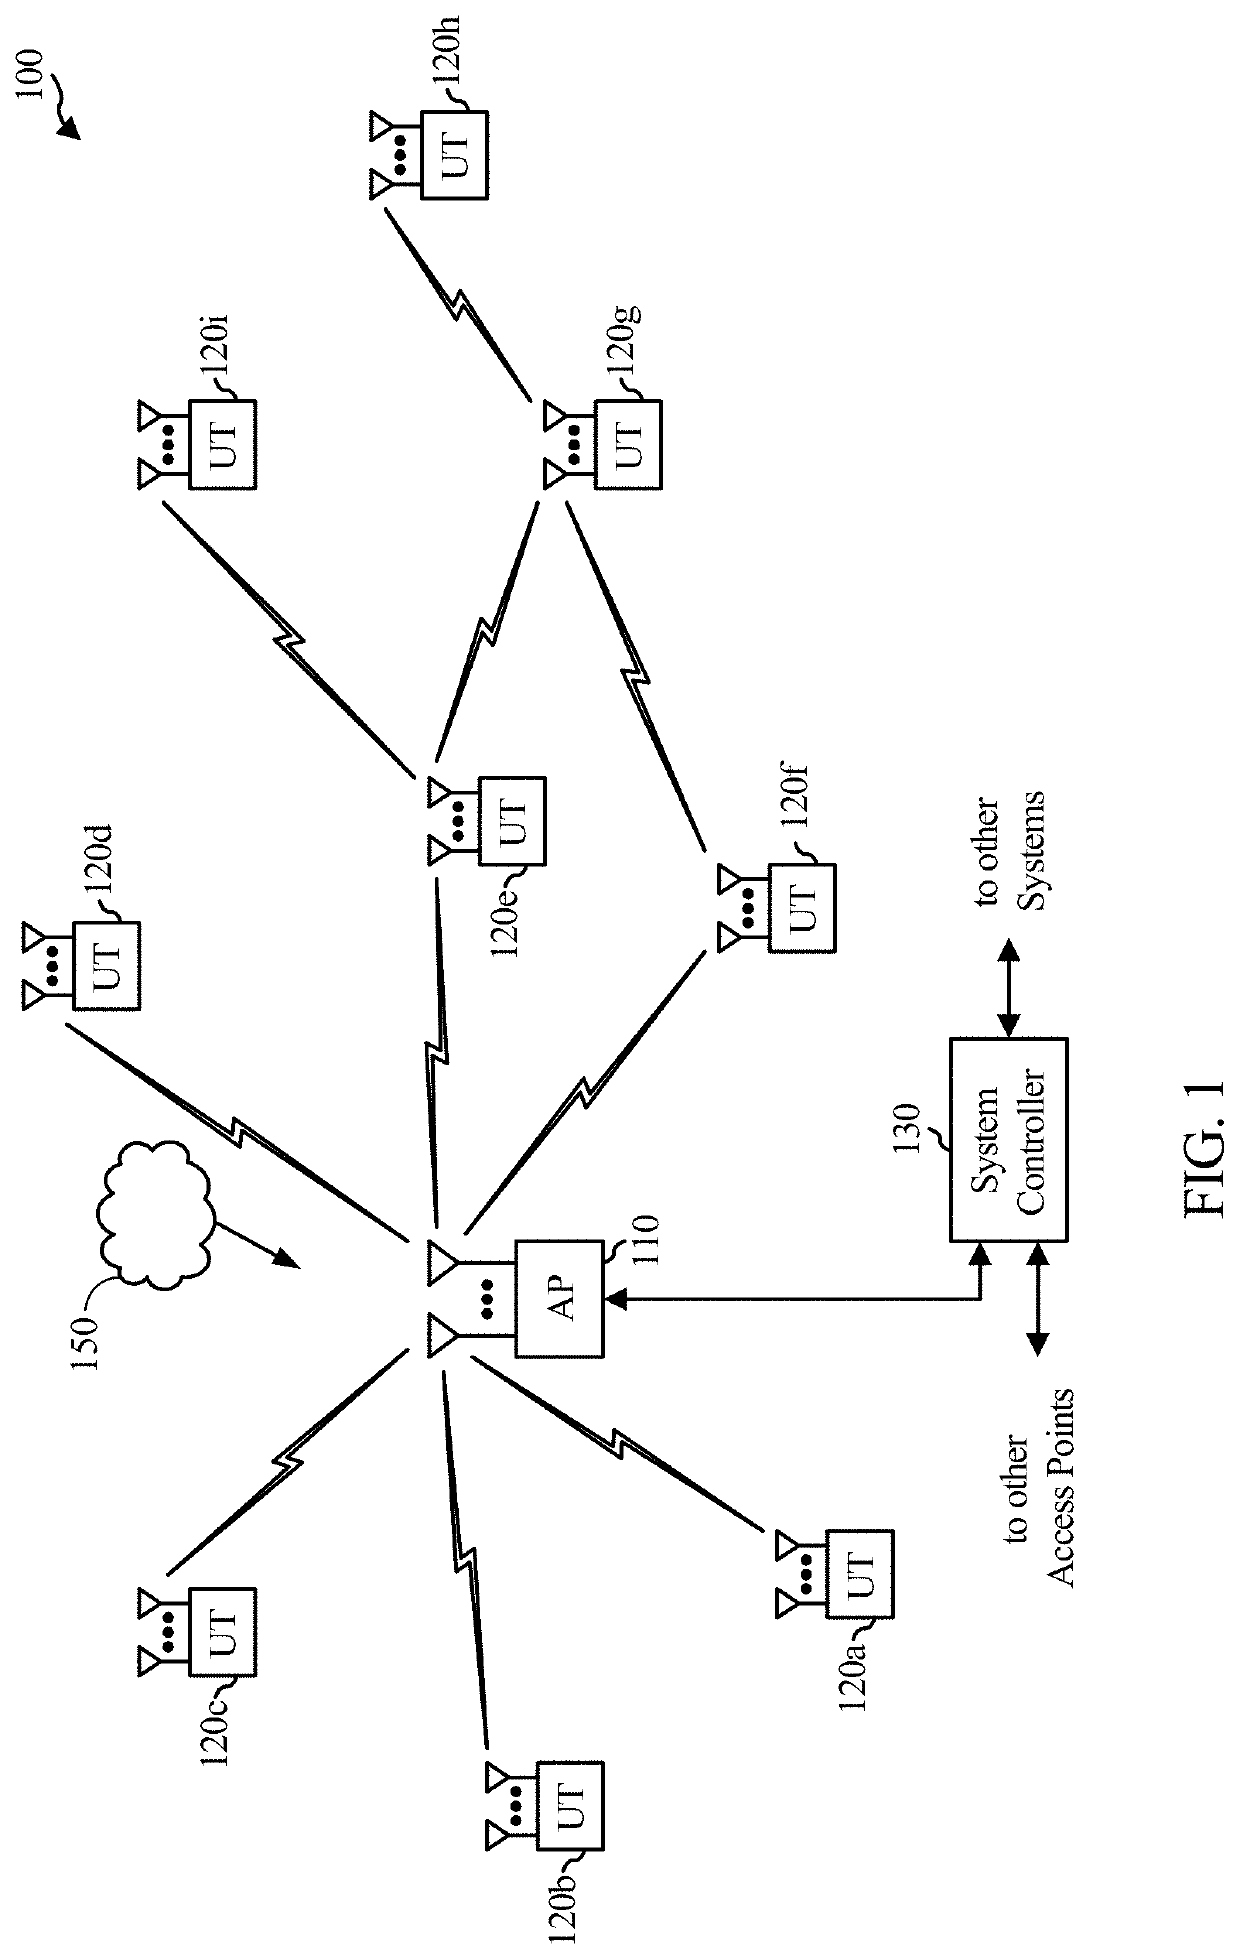 Link margin procedure for enhanced directional multigigabit (EDMG)